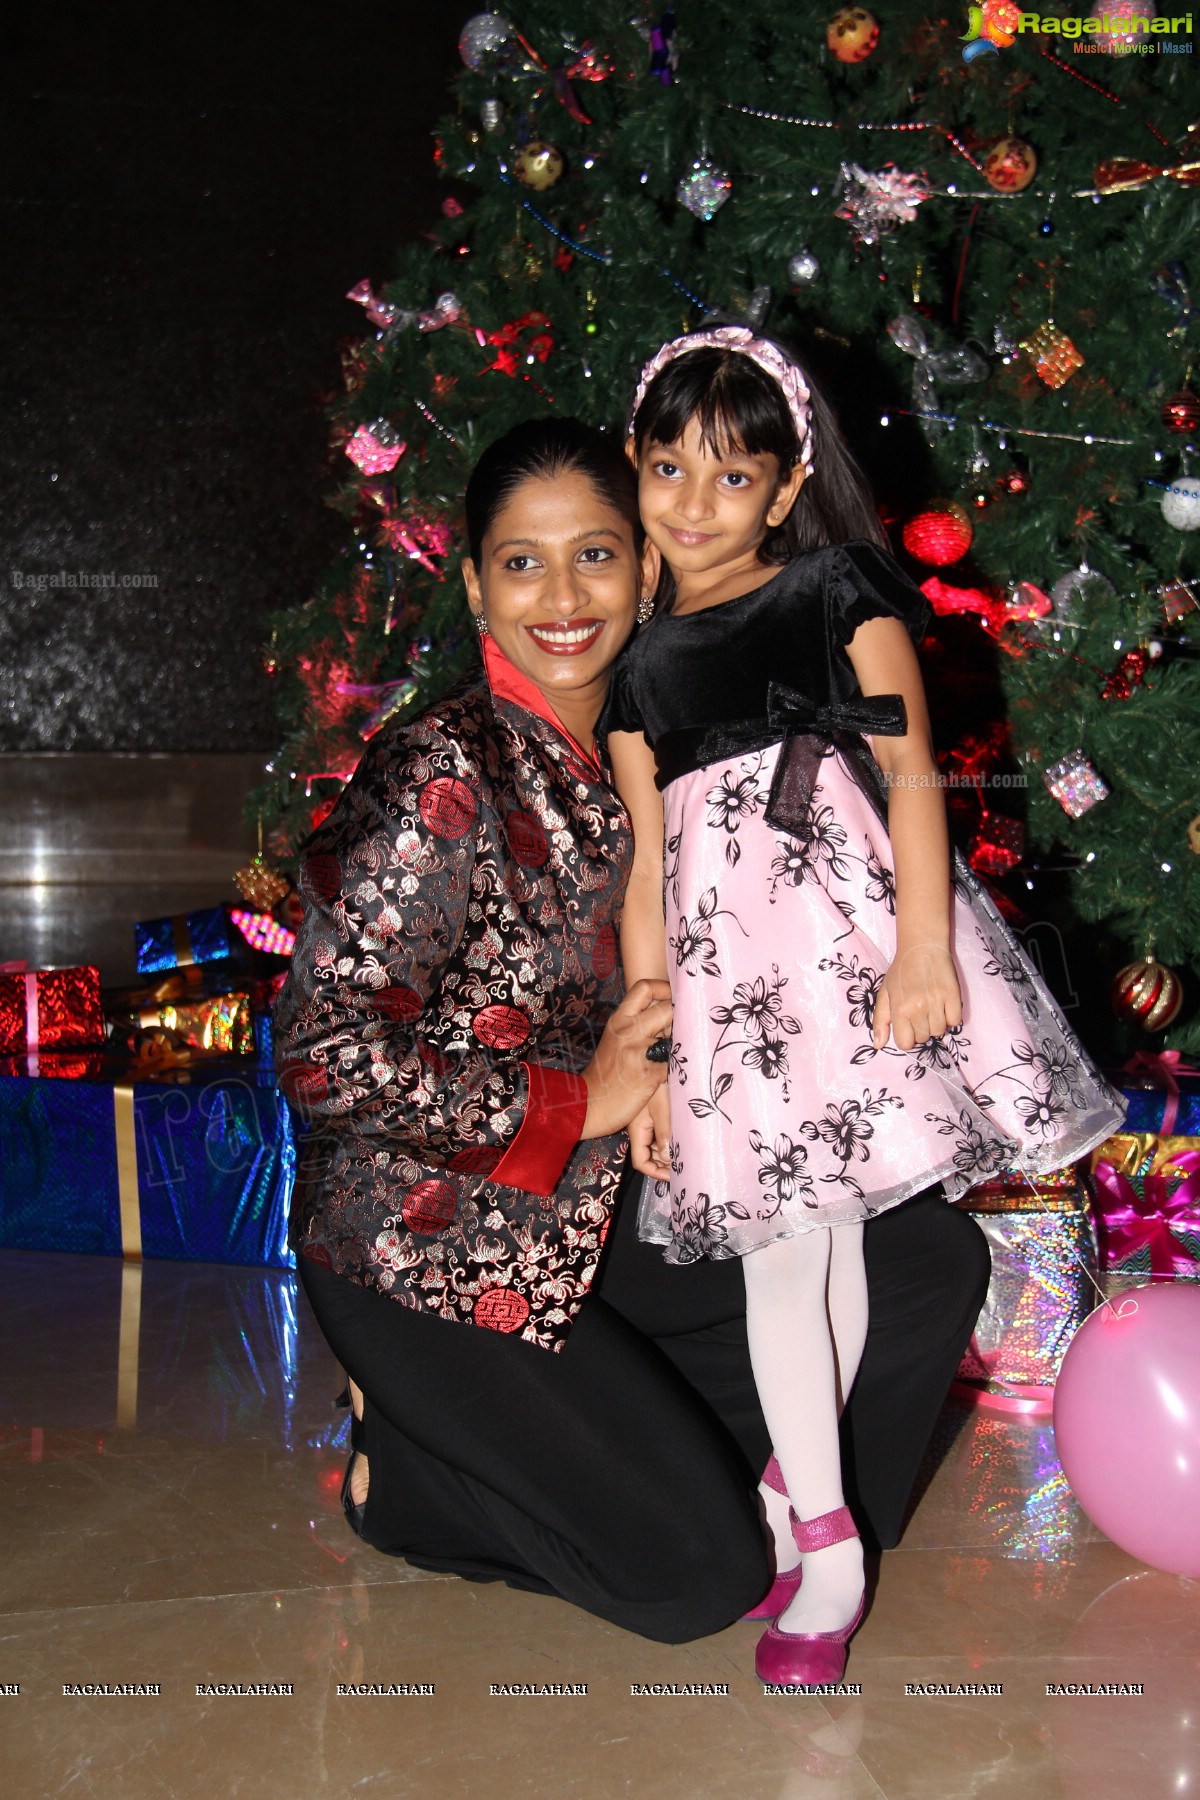 Christmas Tree Lighting Ceremony (2013) at Radisson Blu Plaza, Hyderabad